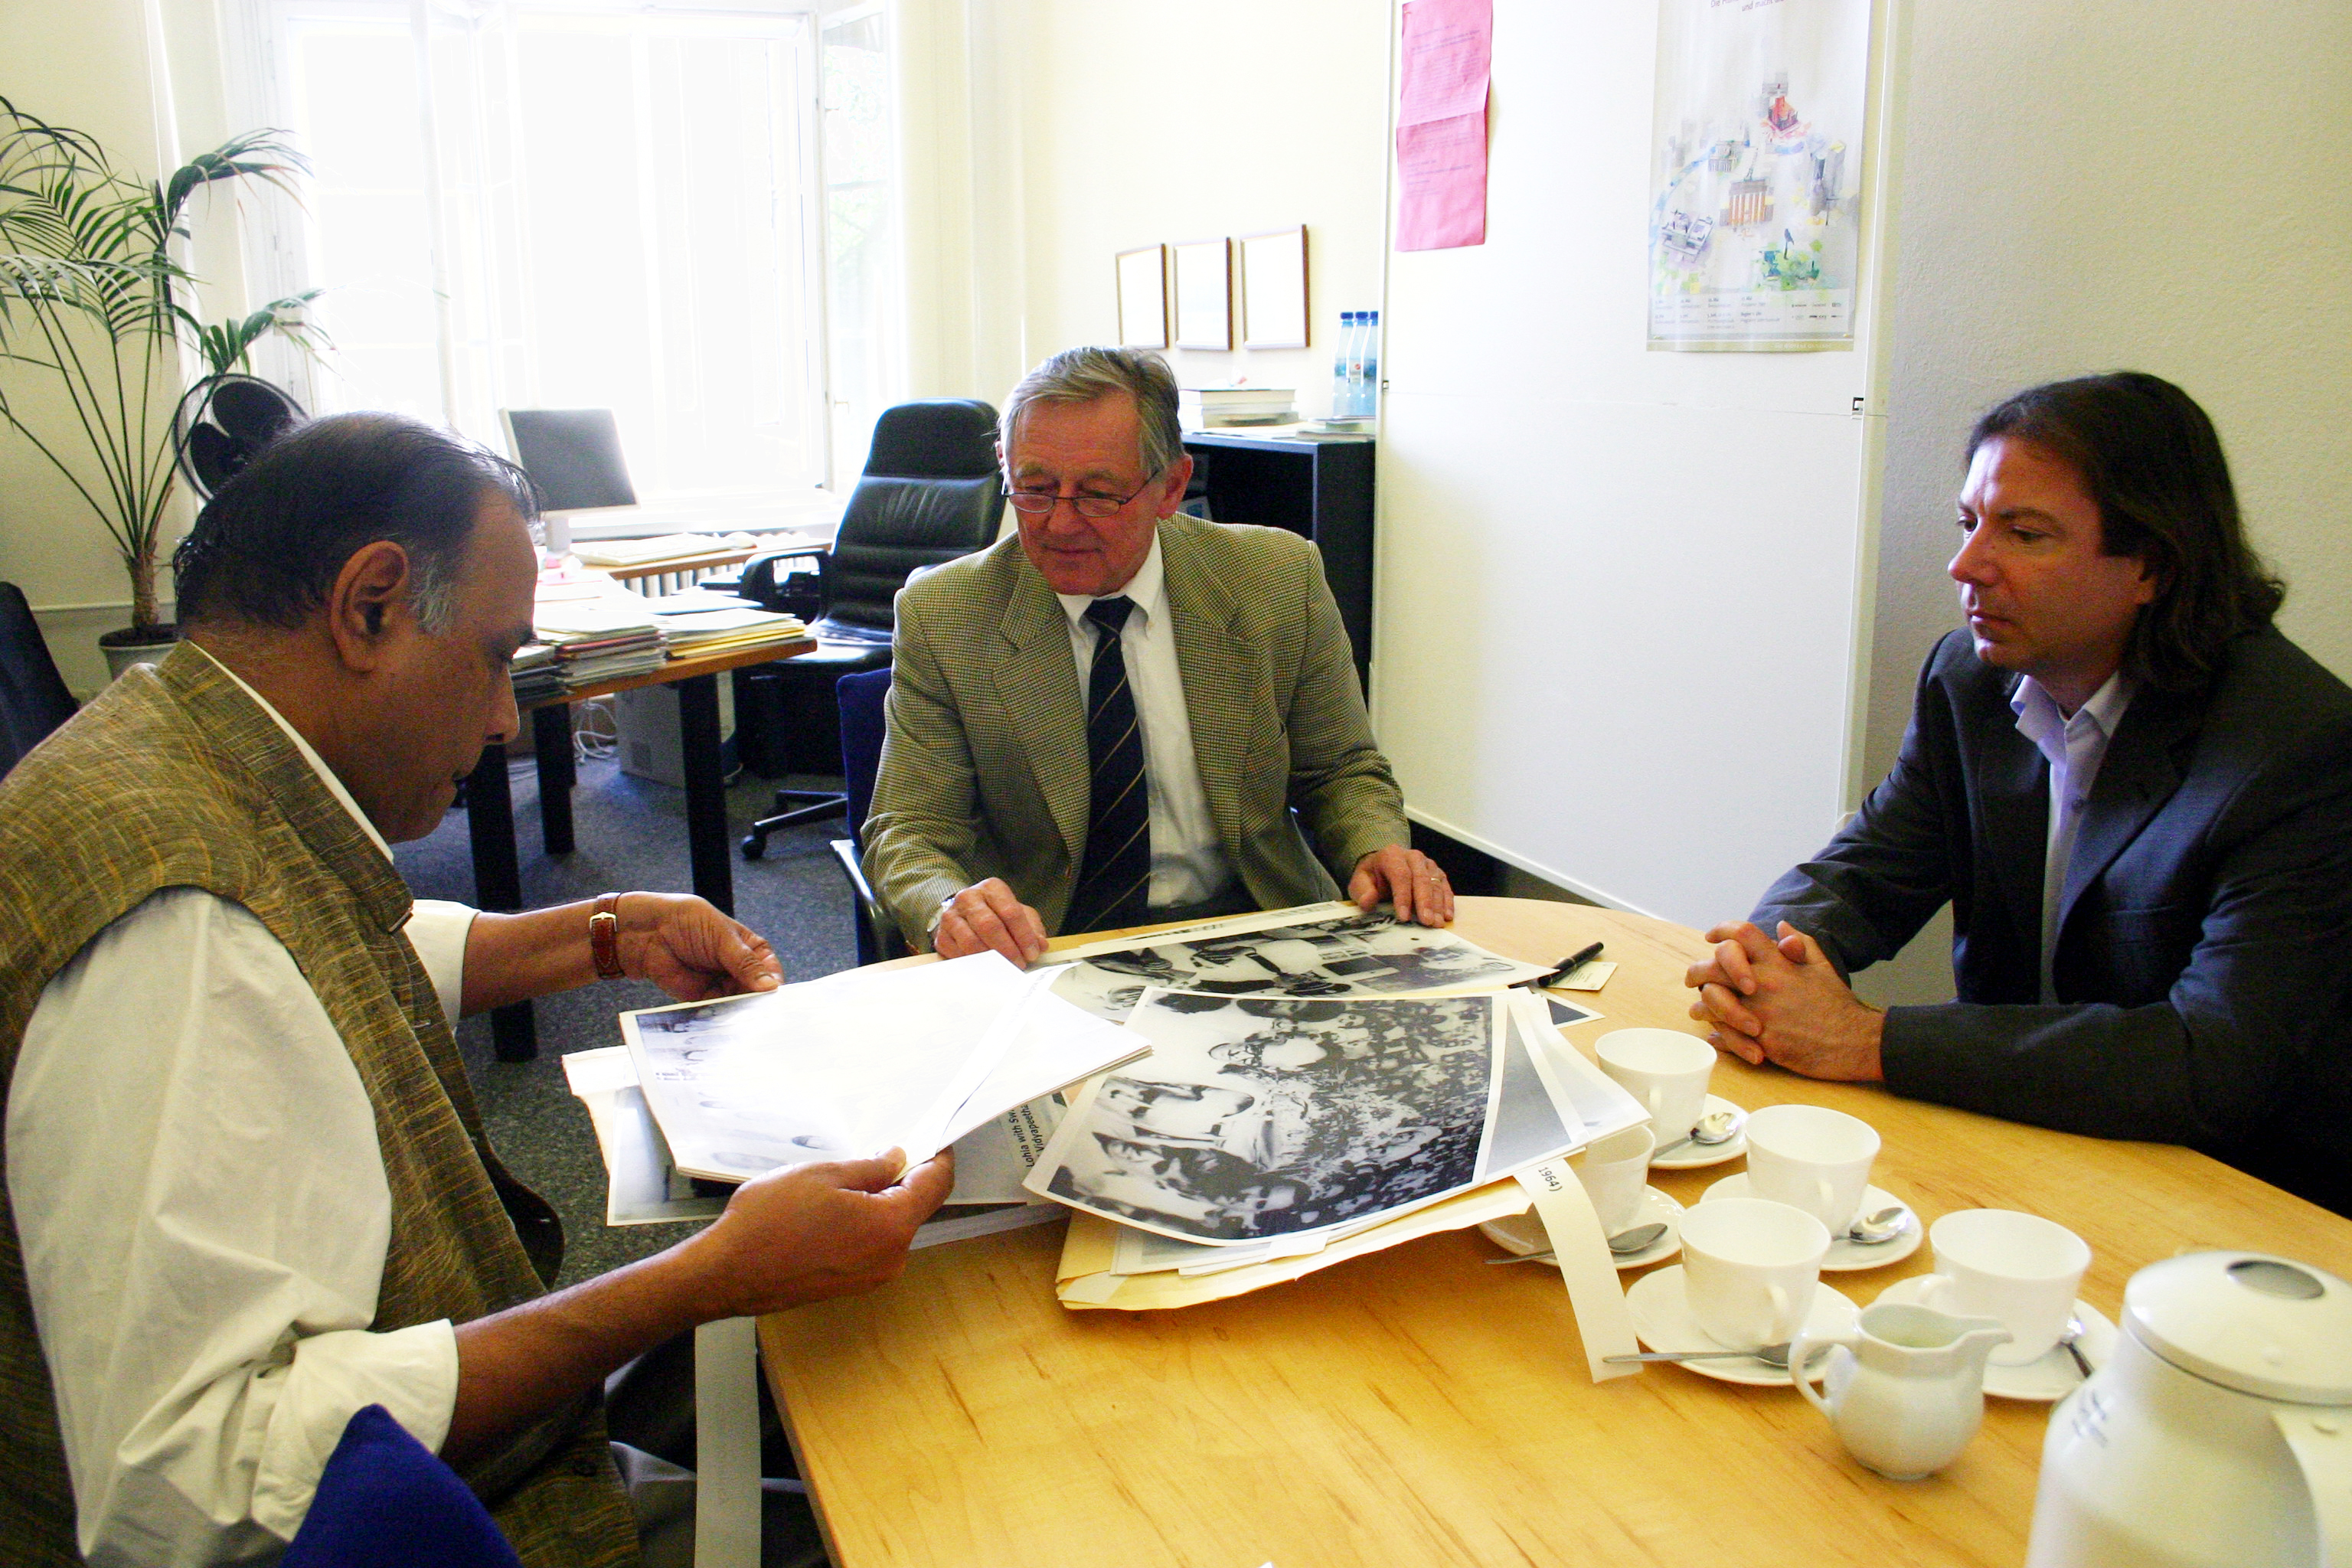 Prof. Dr. Kumar (left) donating rare photographs & books by Lohia to Humboldt University, 06/2010.